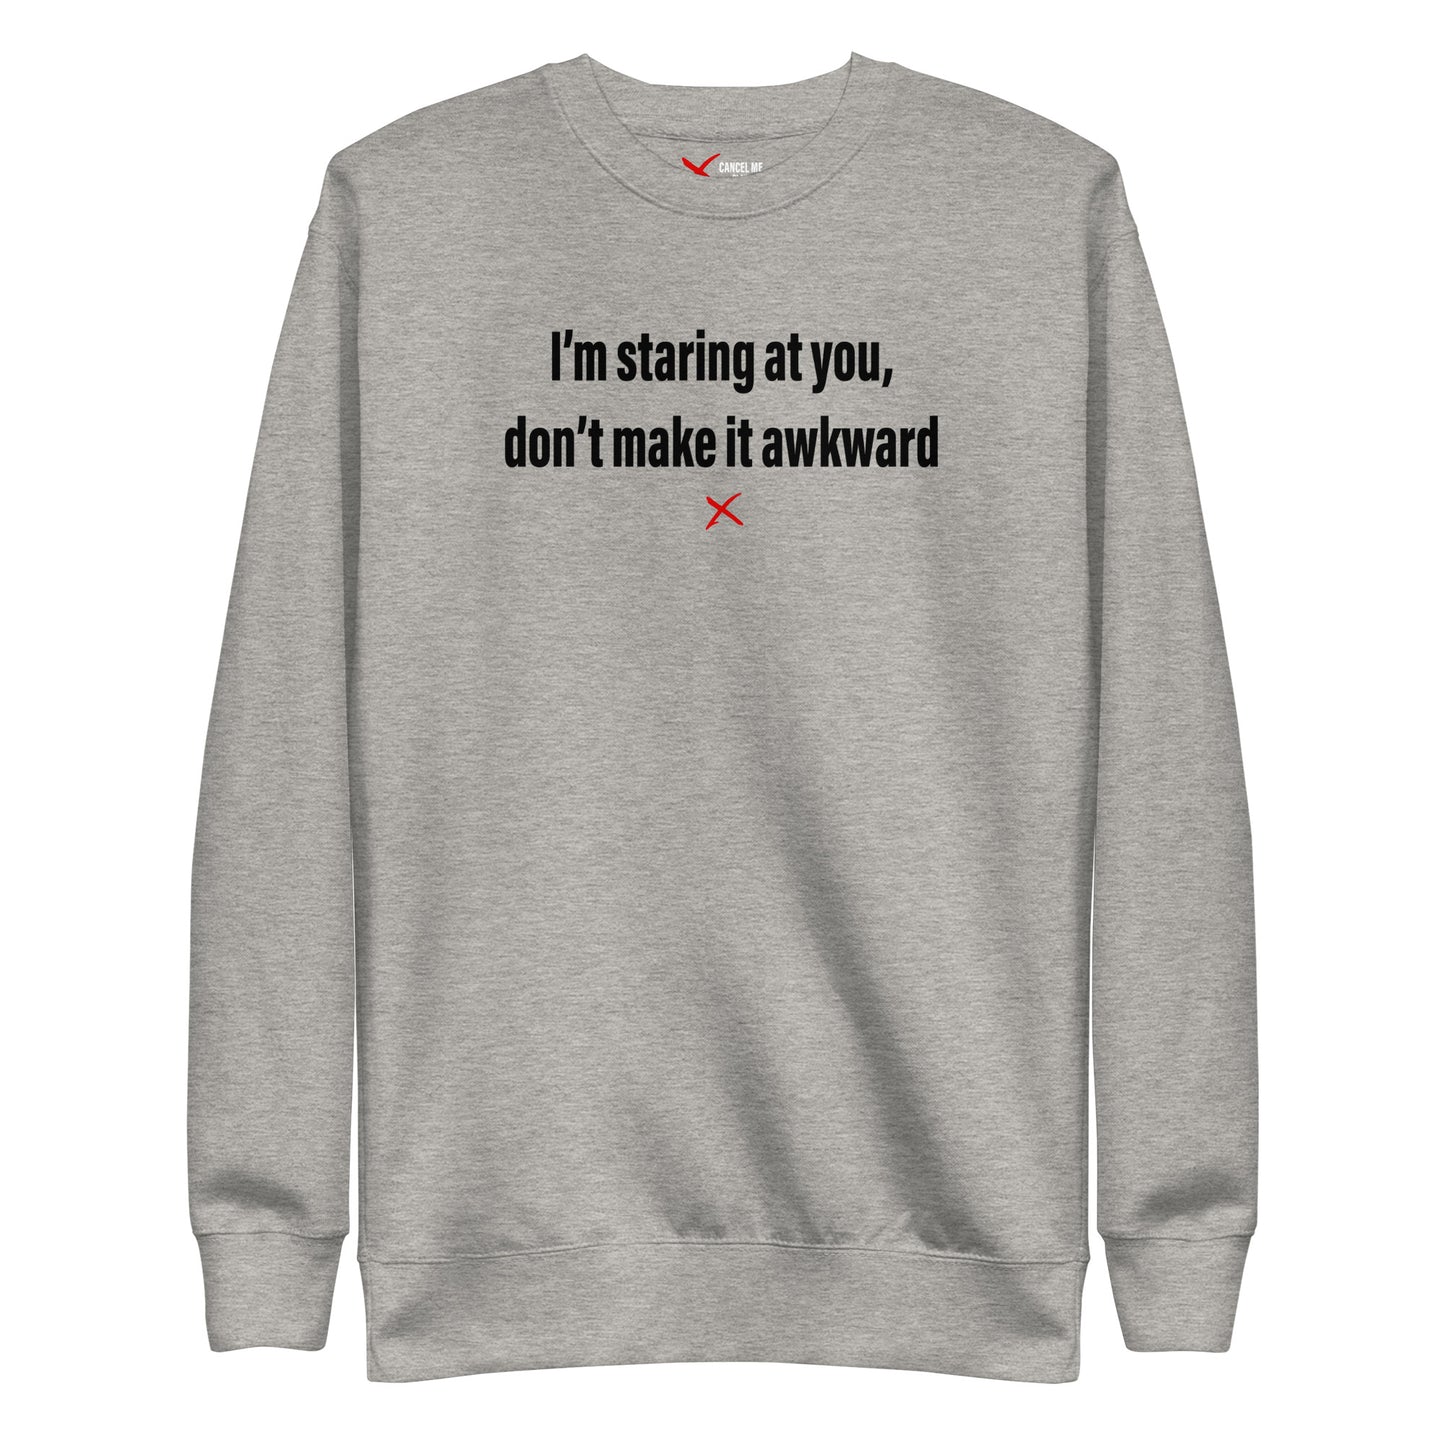 I'm staring at you, don't make it awkward - Sweatshirt